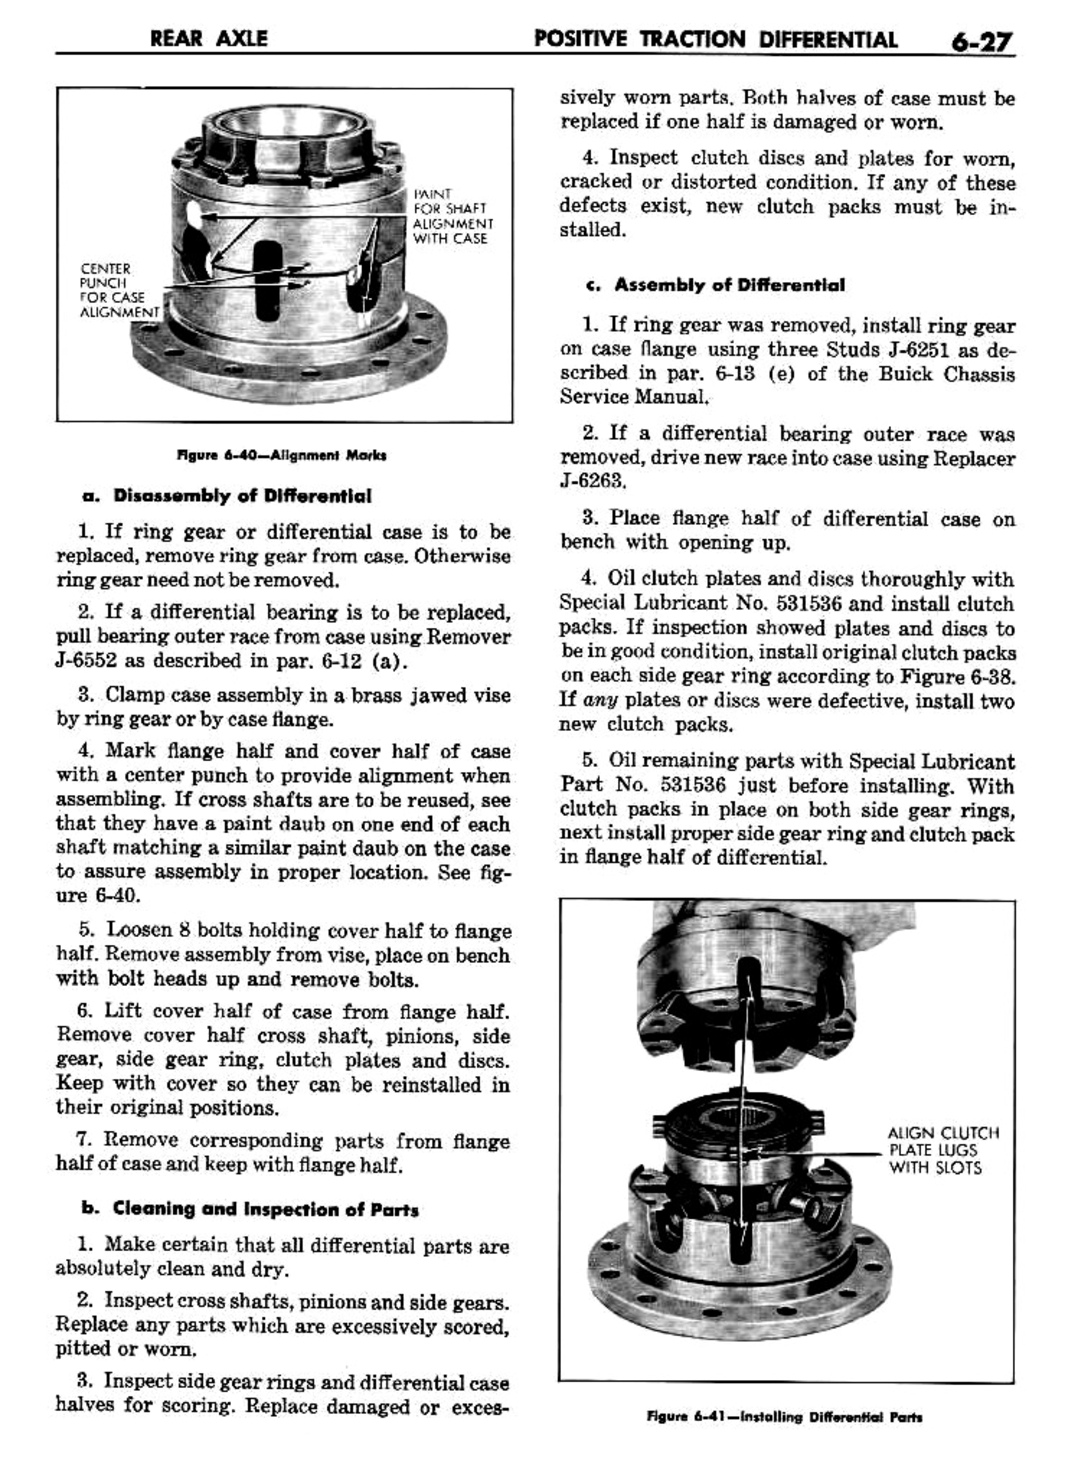 n_07 1960 Buick Shop Manual - Rear Axle-027-027.jpg